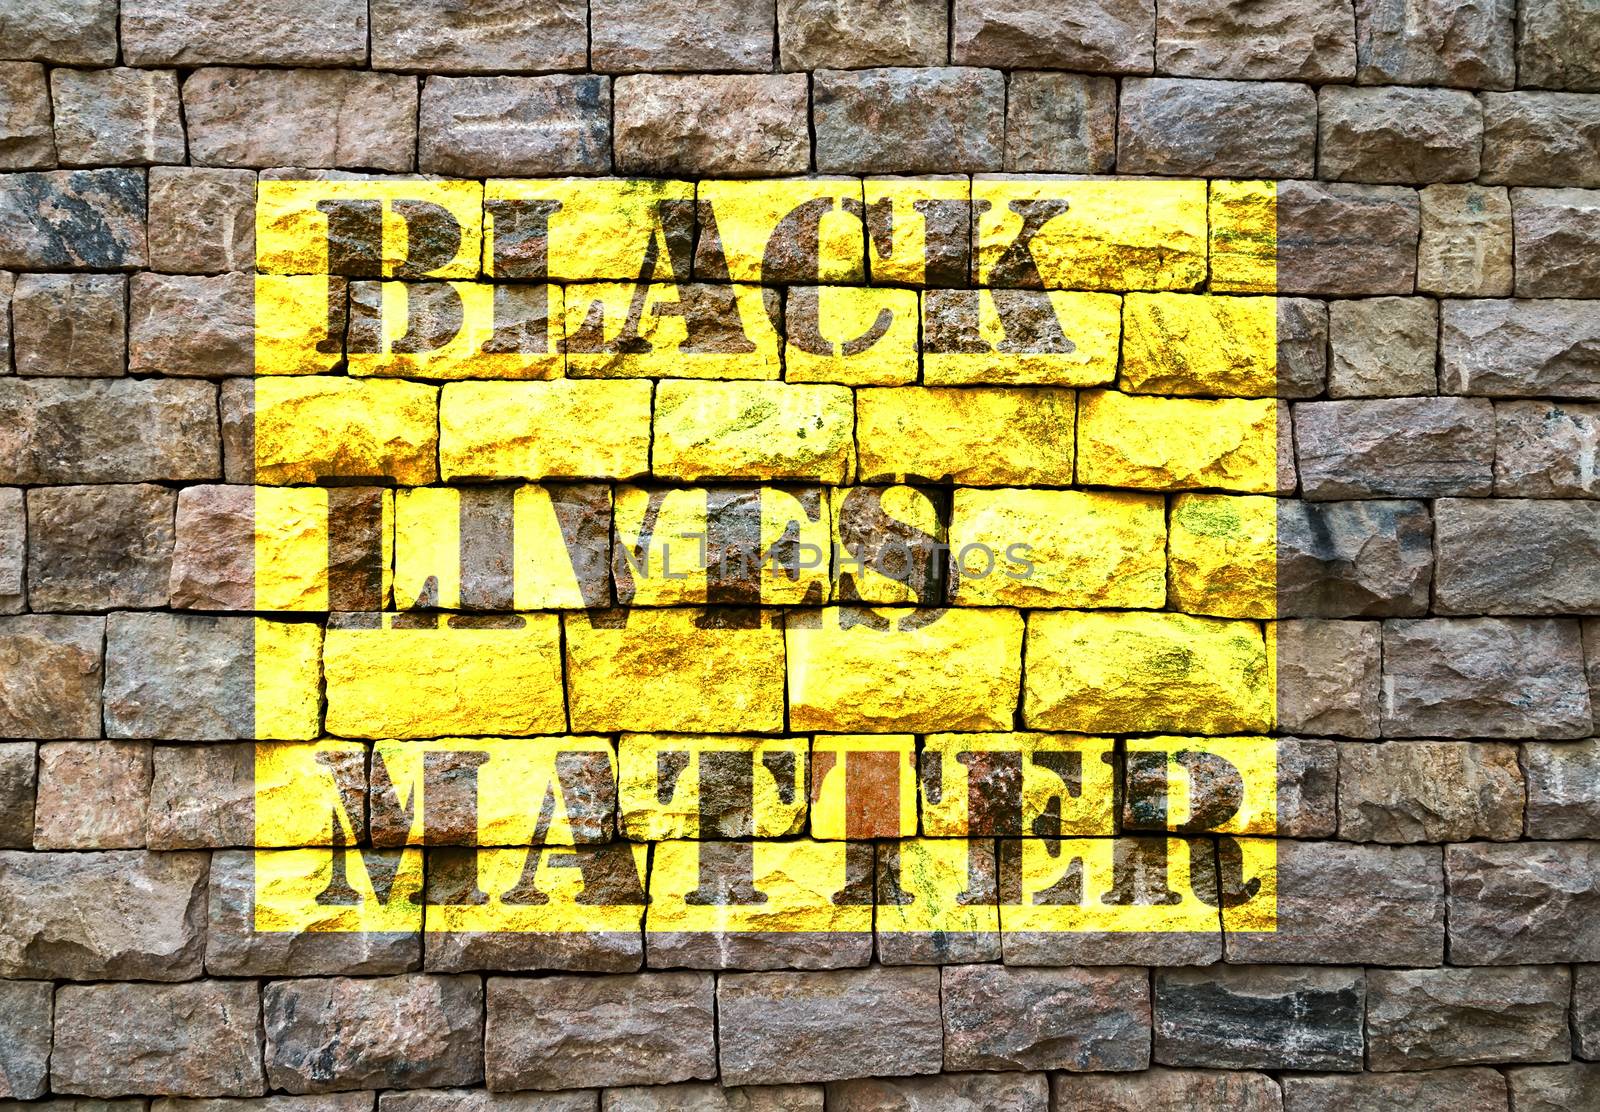 Black Lives Matter slogan liberation banner designs yellow stencil Old brick wall background texture stone